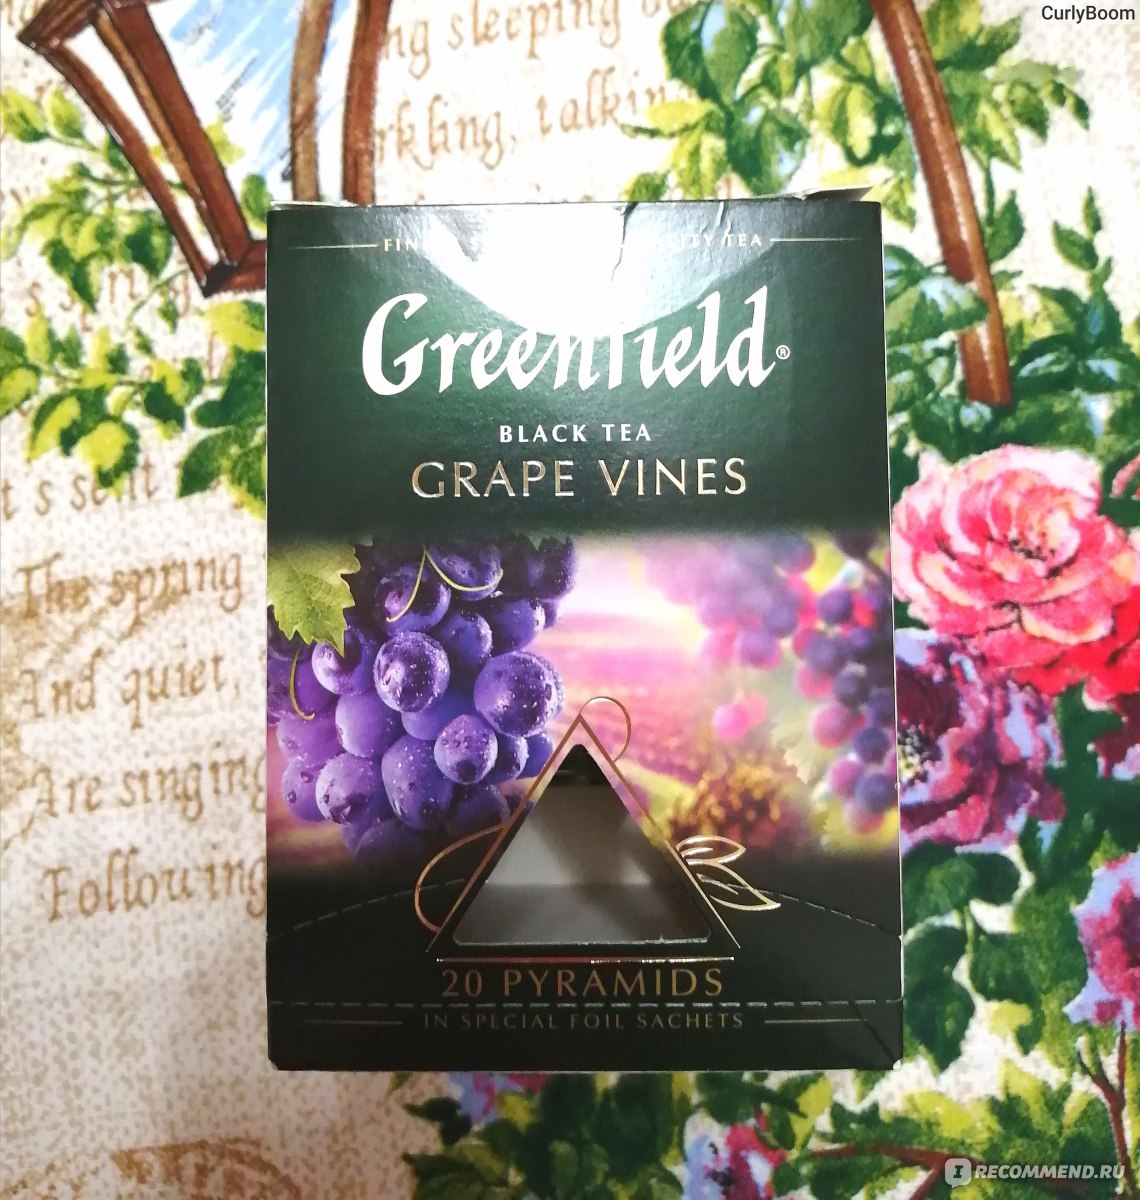 Гринфилд виноград. Гринфилд виноград в пирамидках. Виноградный чай Гринфилд. Чай Гринфилд с виноградом grape Vines. Чай Гринфилд с виноградом.